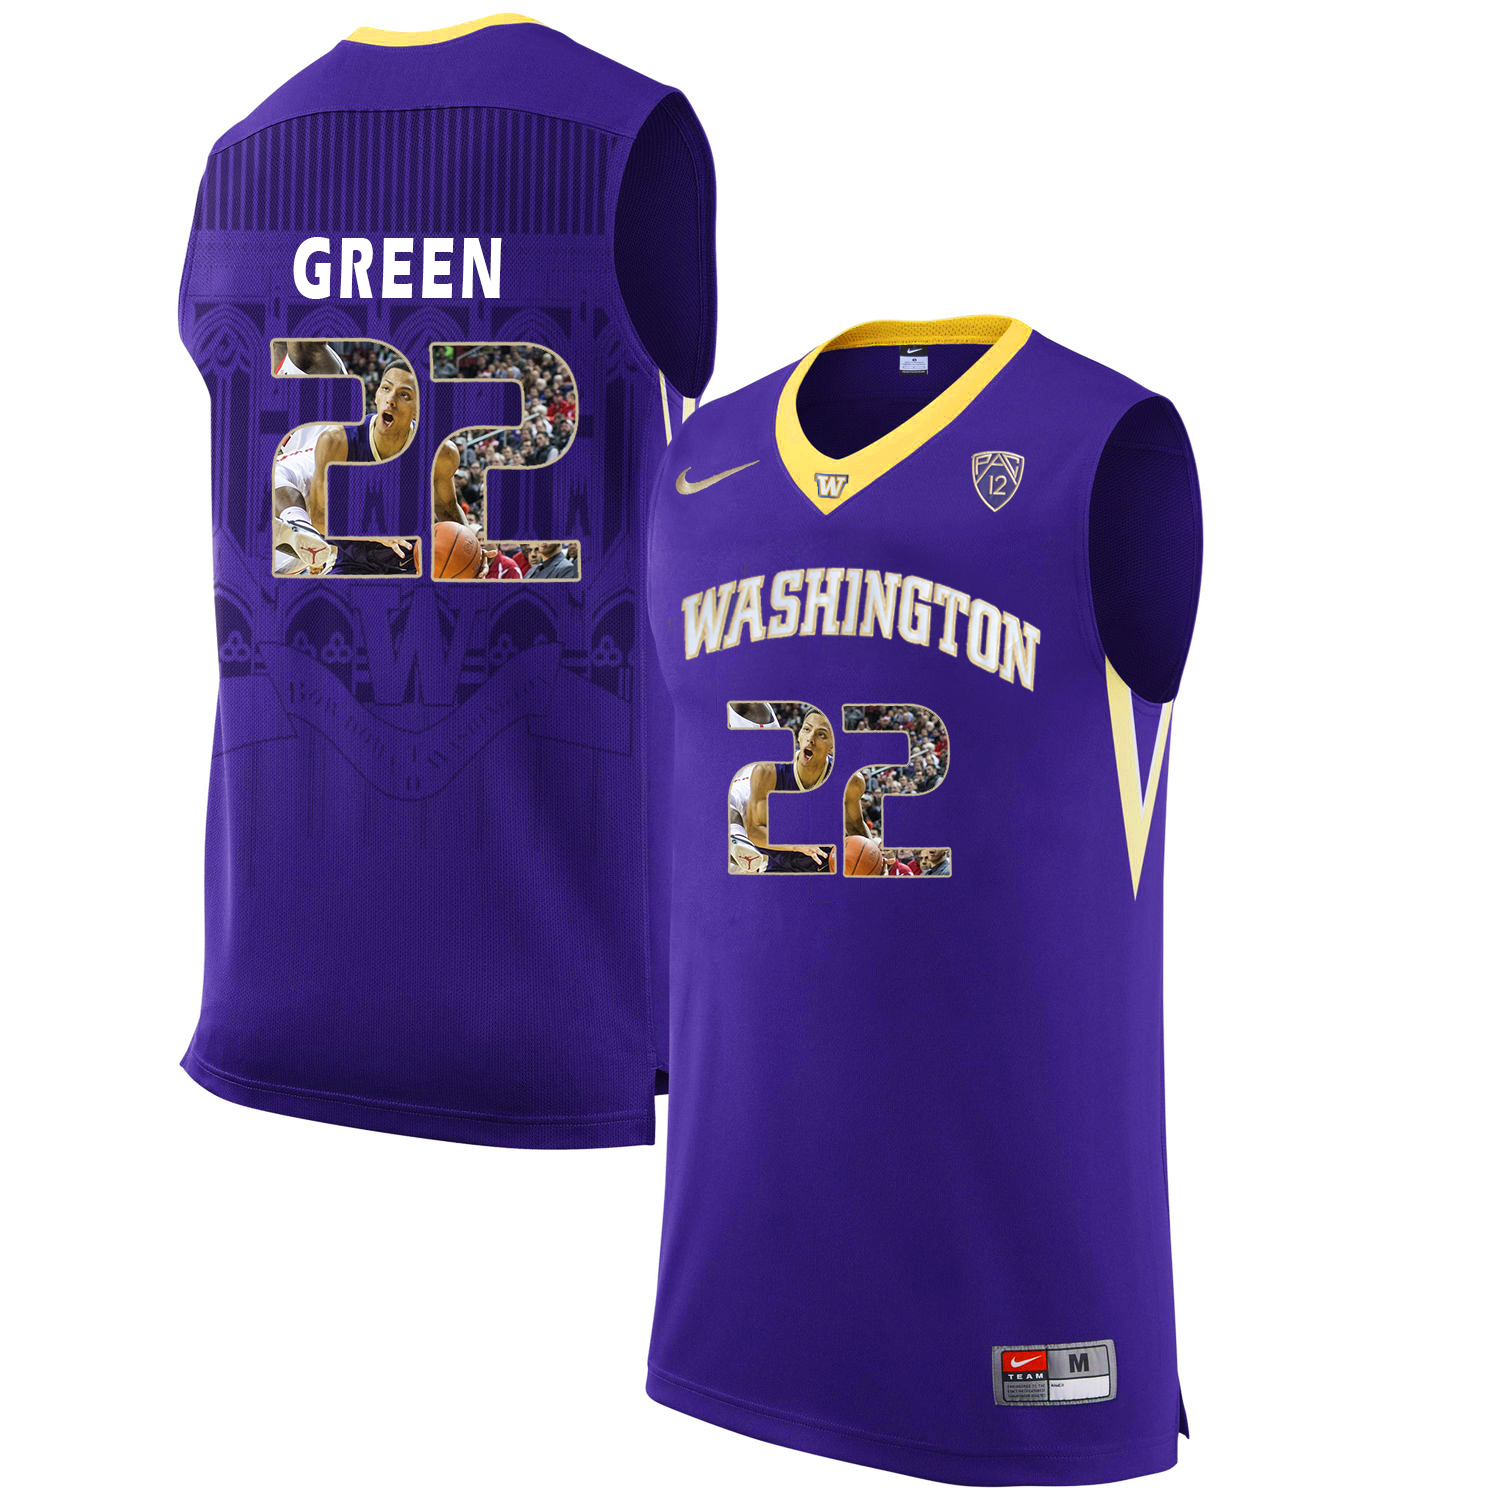 Washington Huskies 22 Dominic Green Purple With Portait College Basketball Jersey